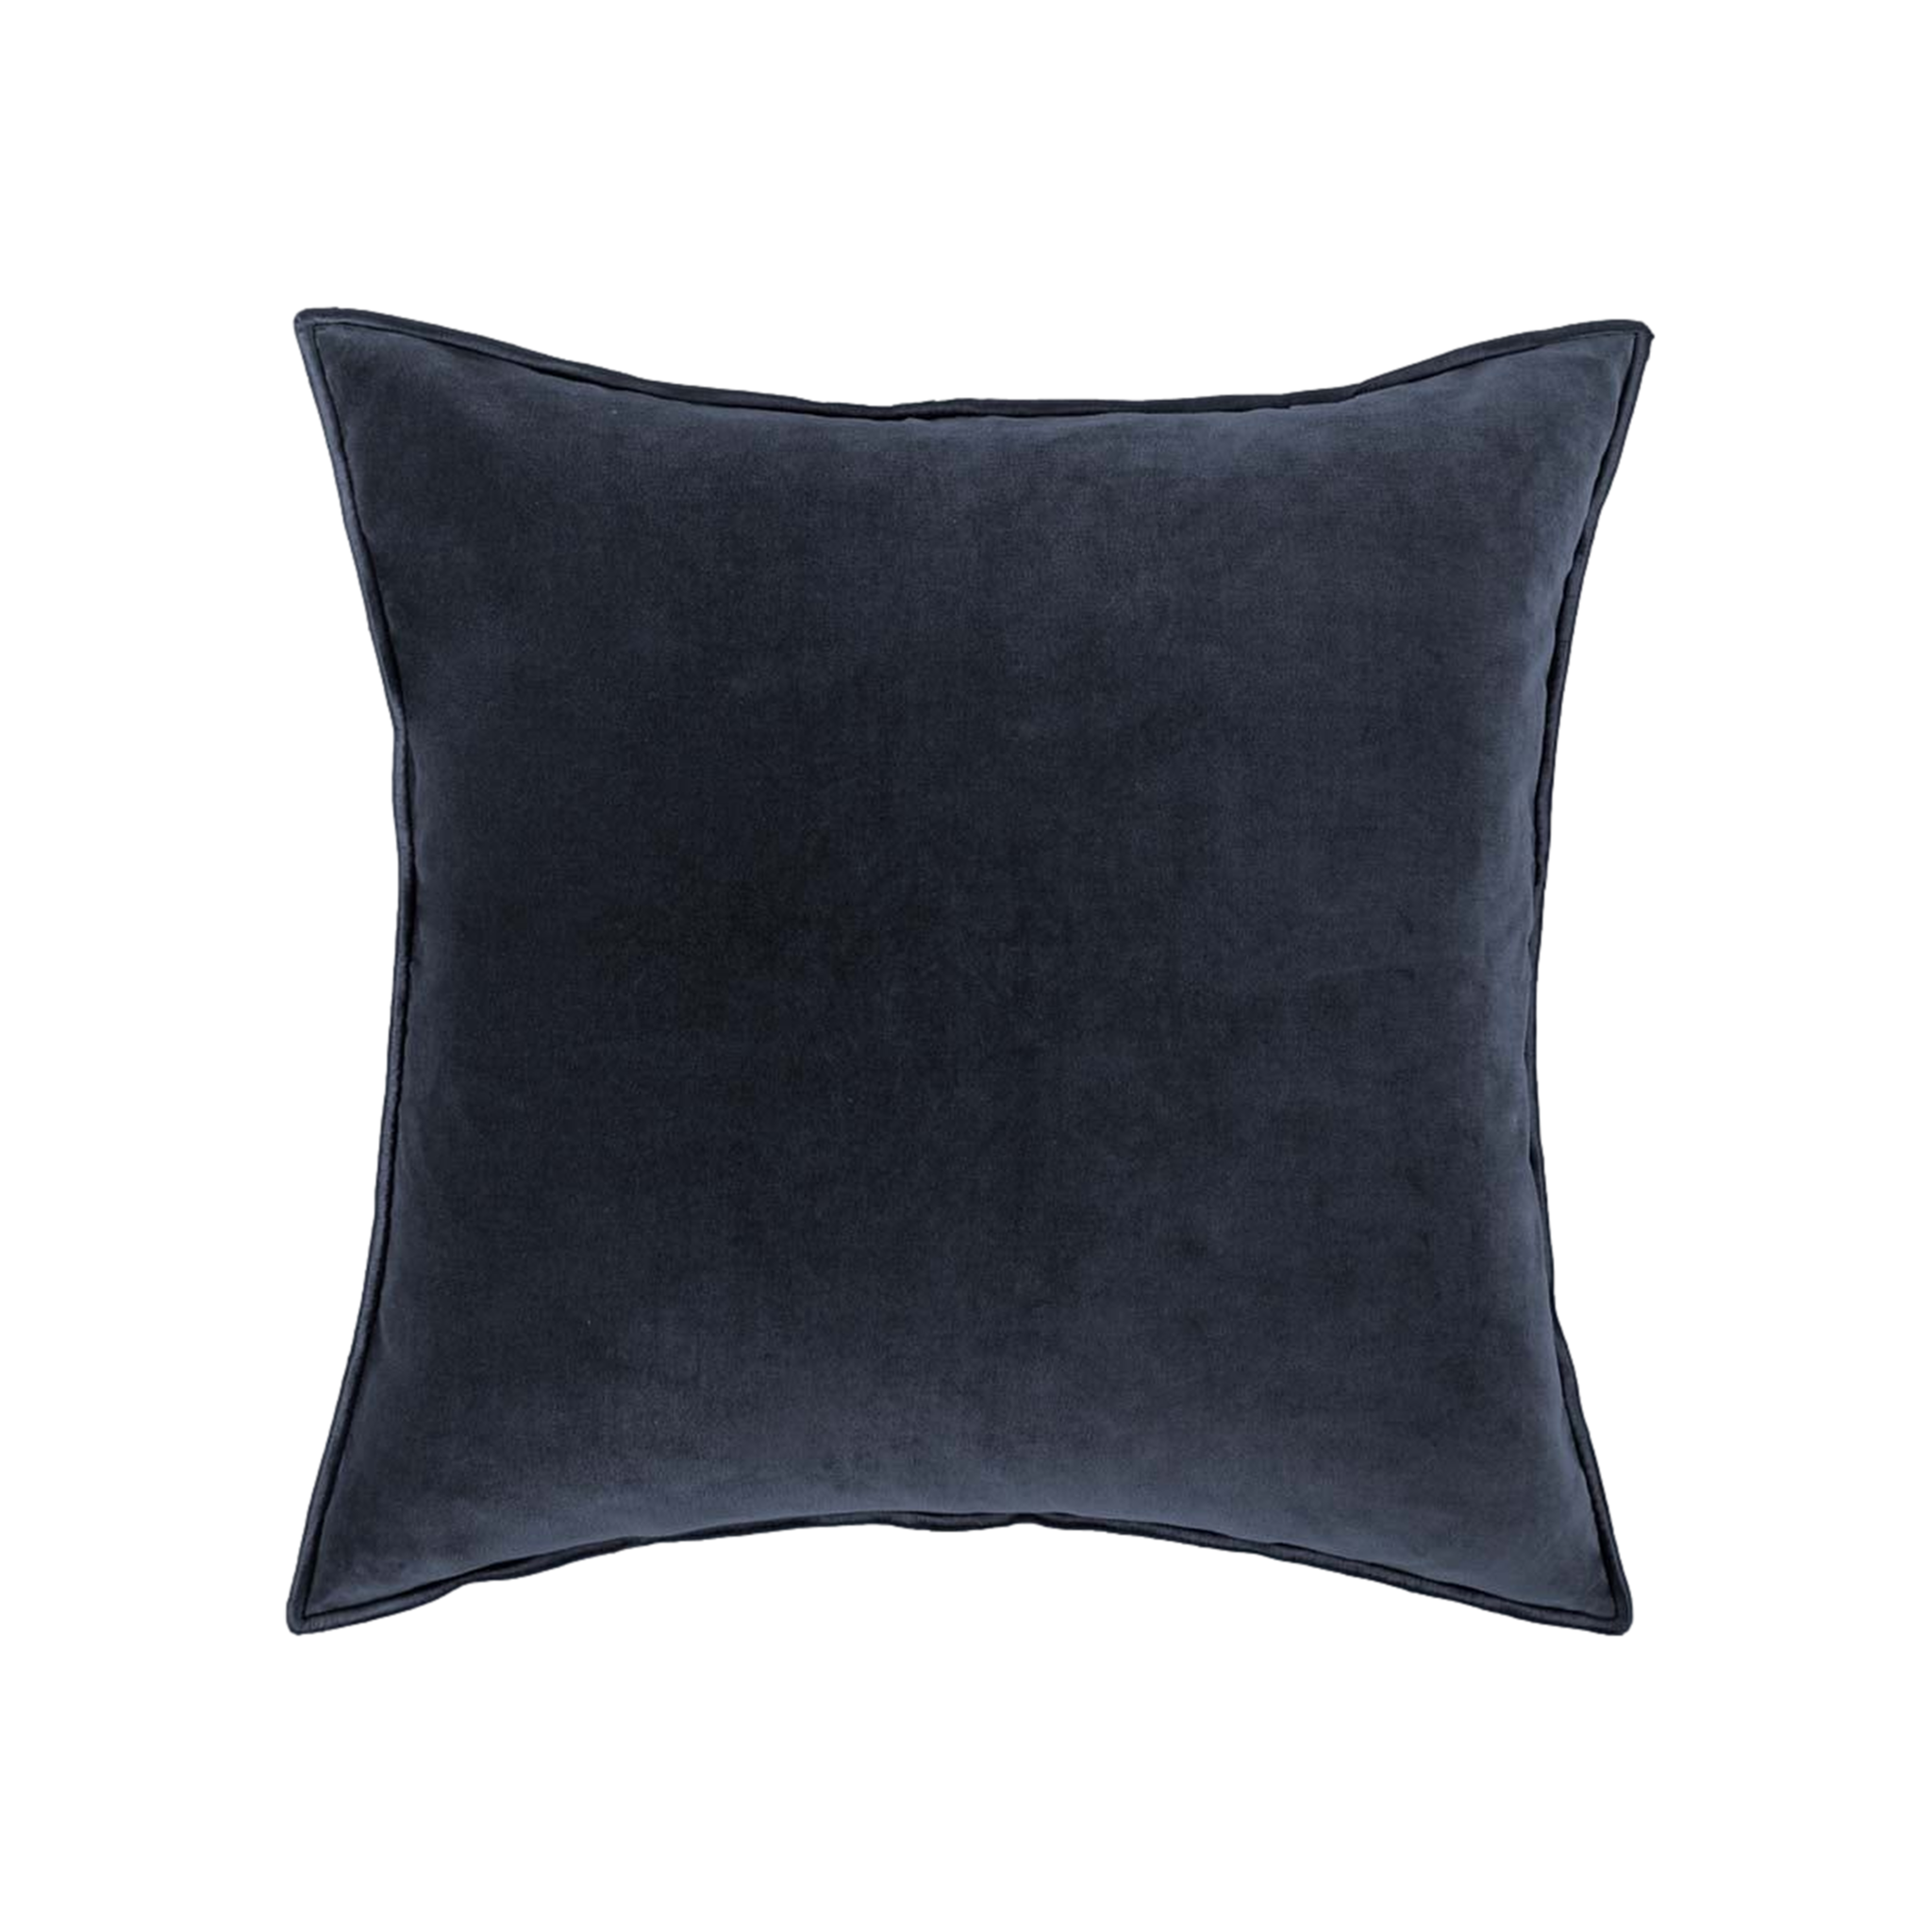 Sloane Pillow in Indigo